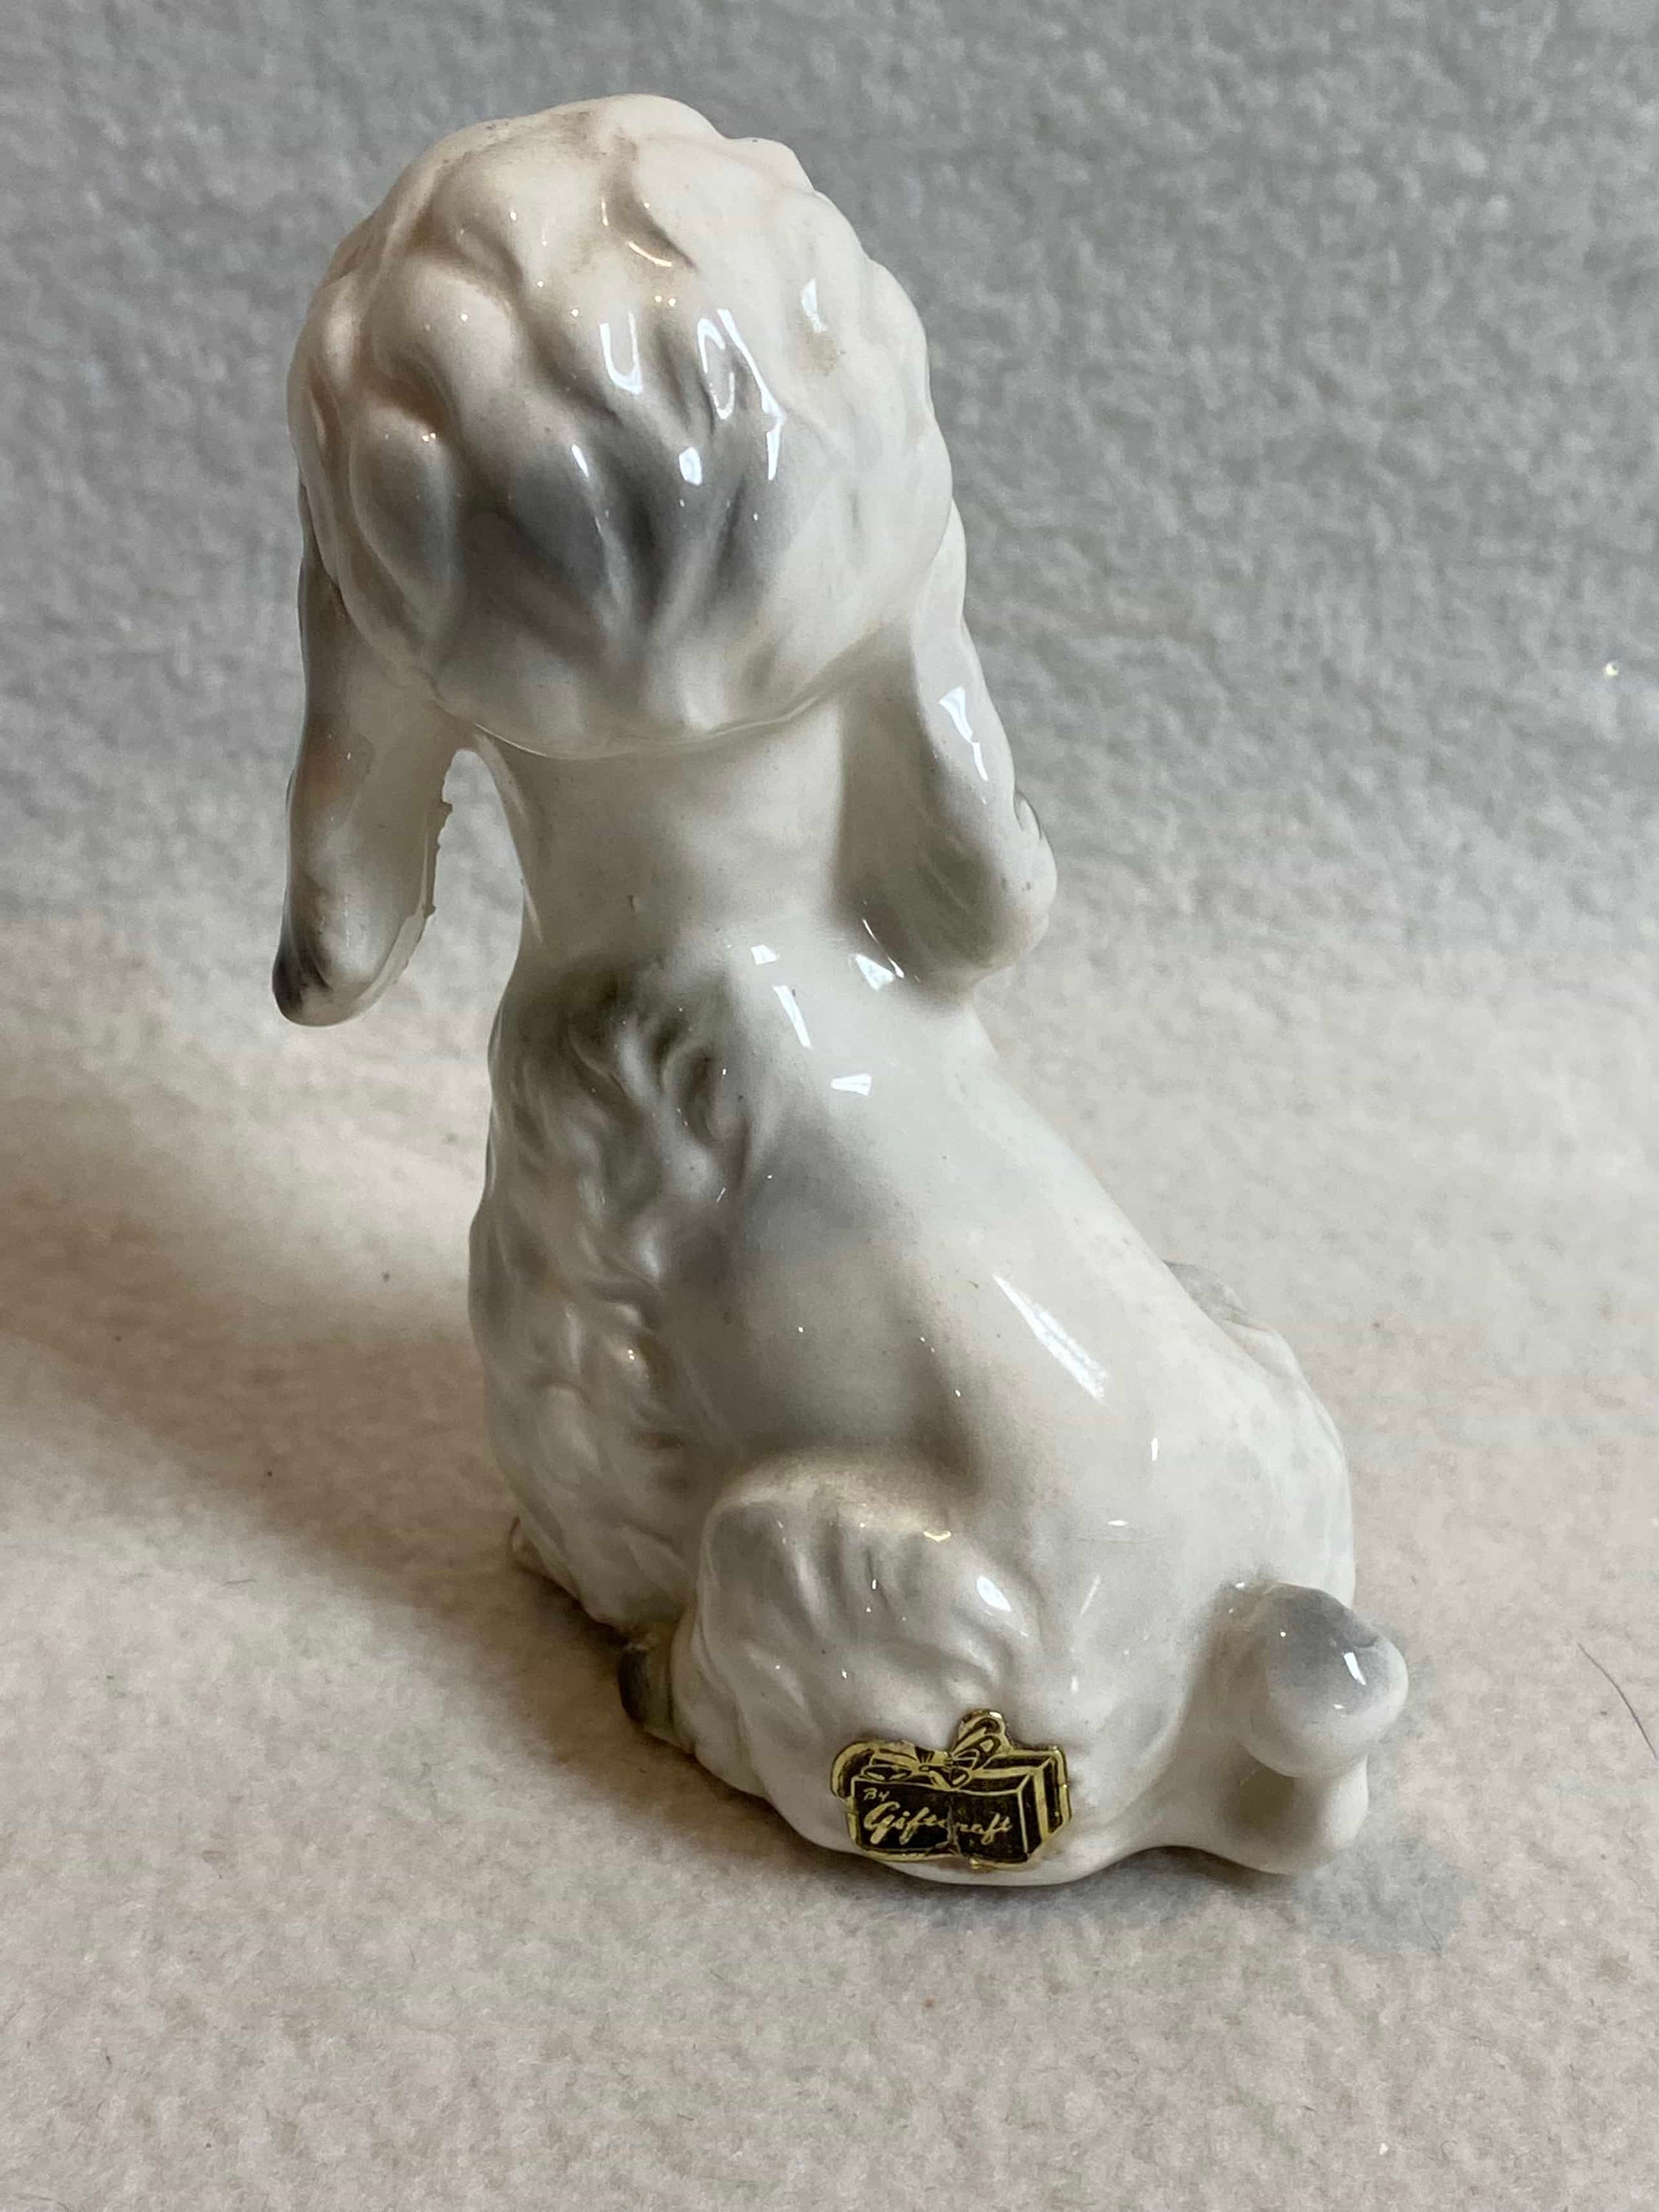 Vintage Japan Small White Poodle Dog Figurine BCD385 - Etsy